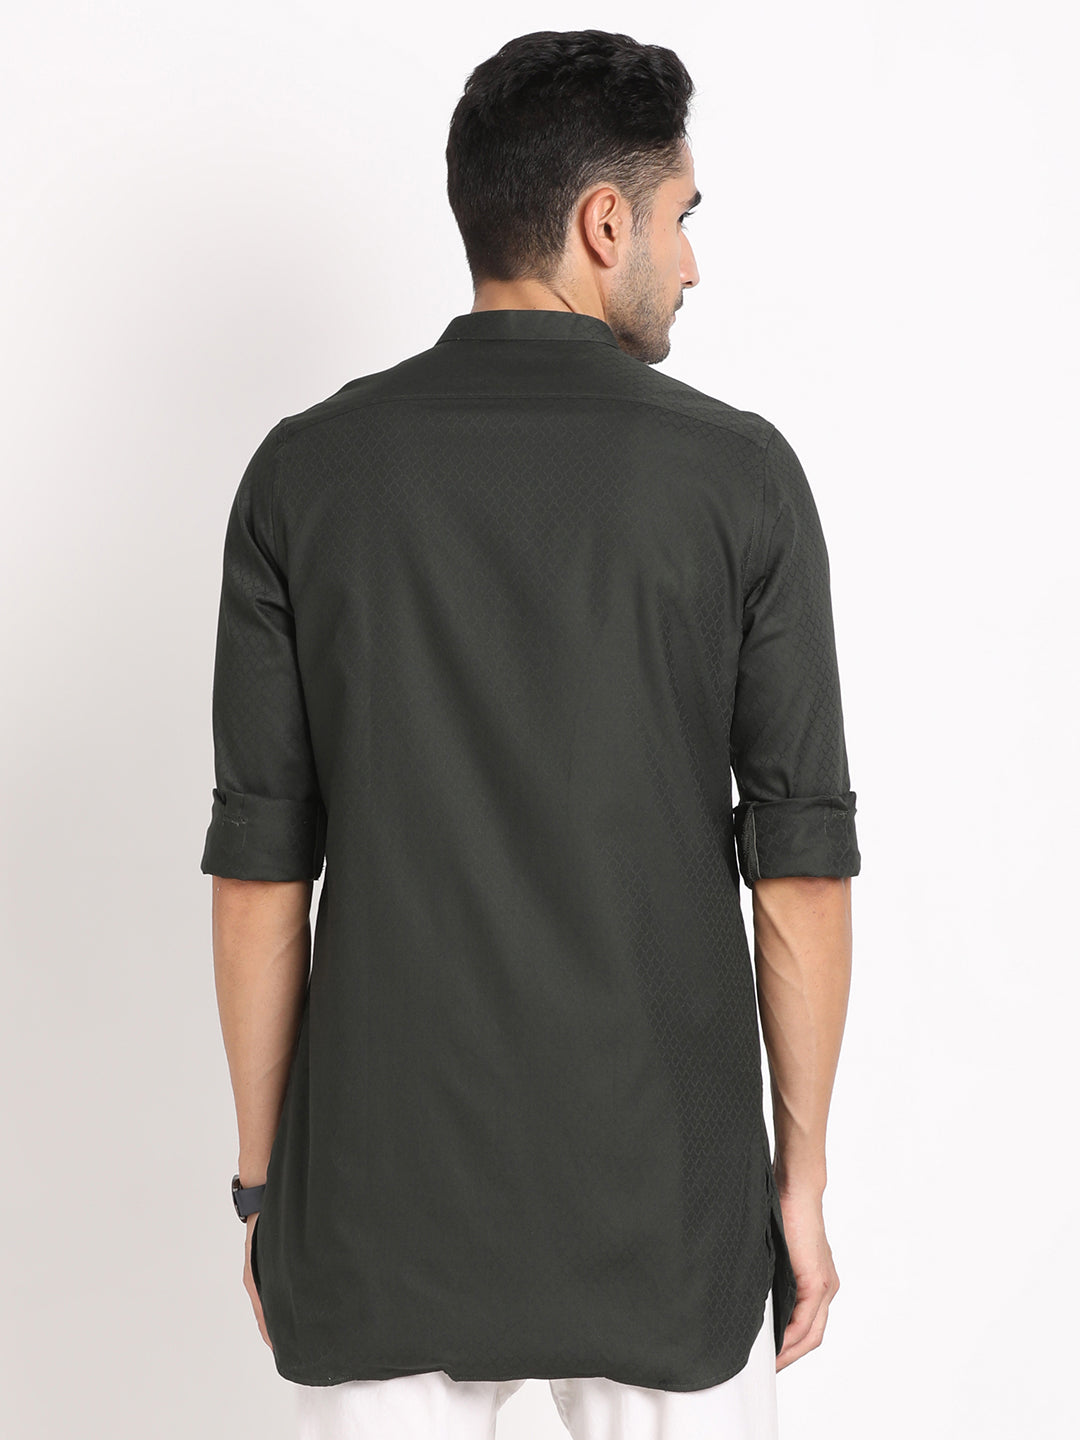 100% Cotton Dark Green Jacquard Kurta Full Sleeve Ceremonial Shirt